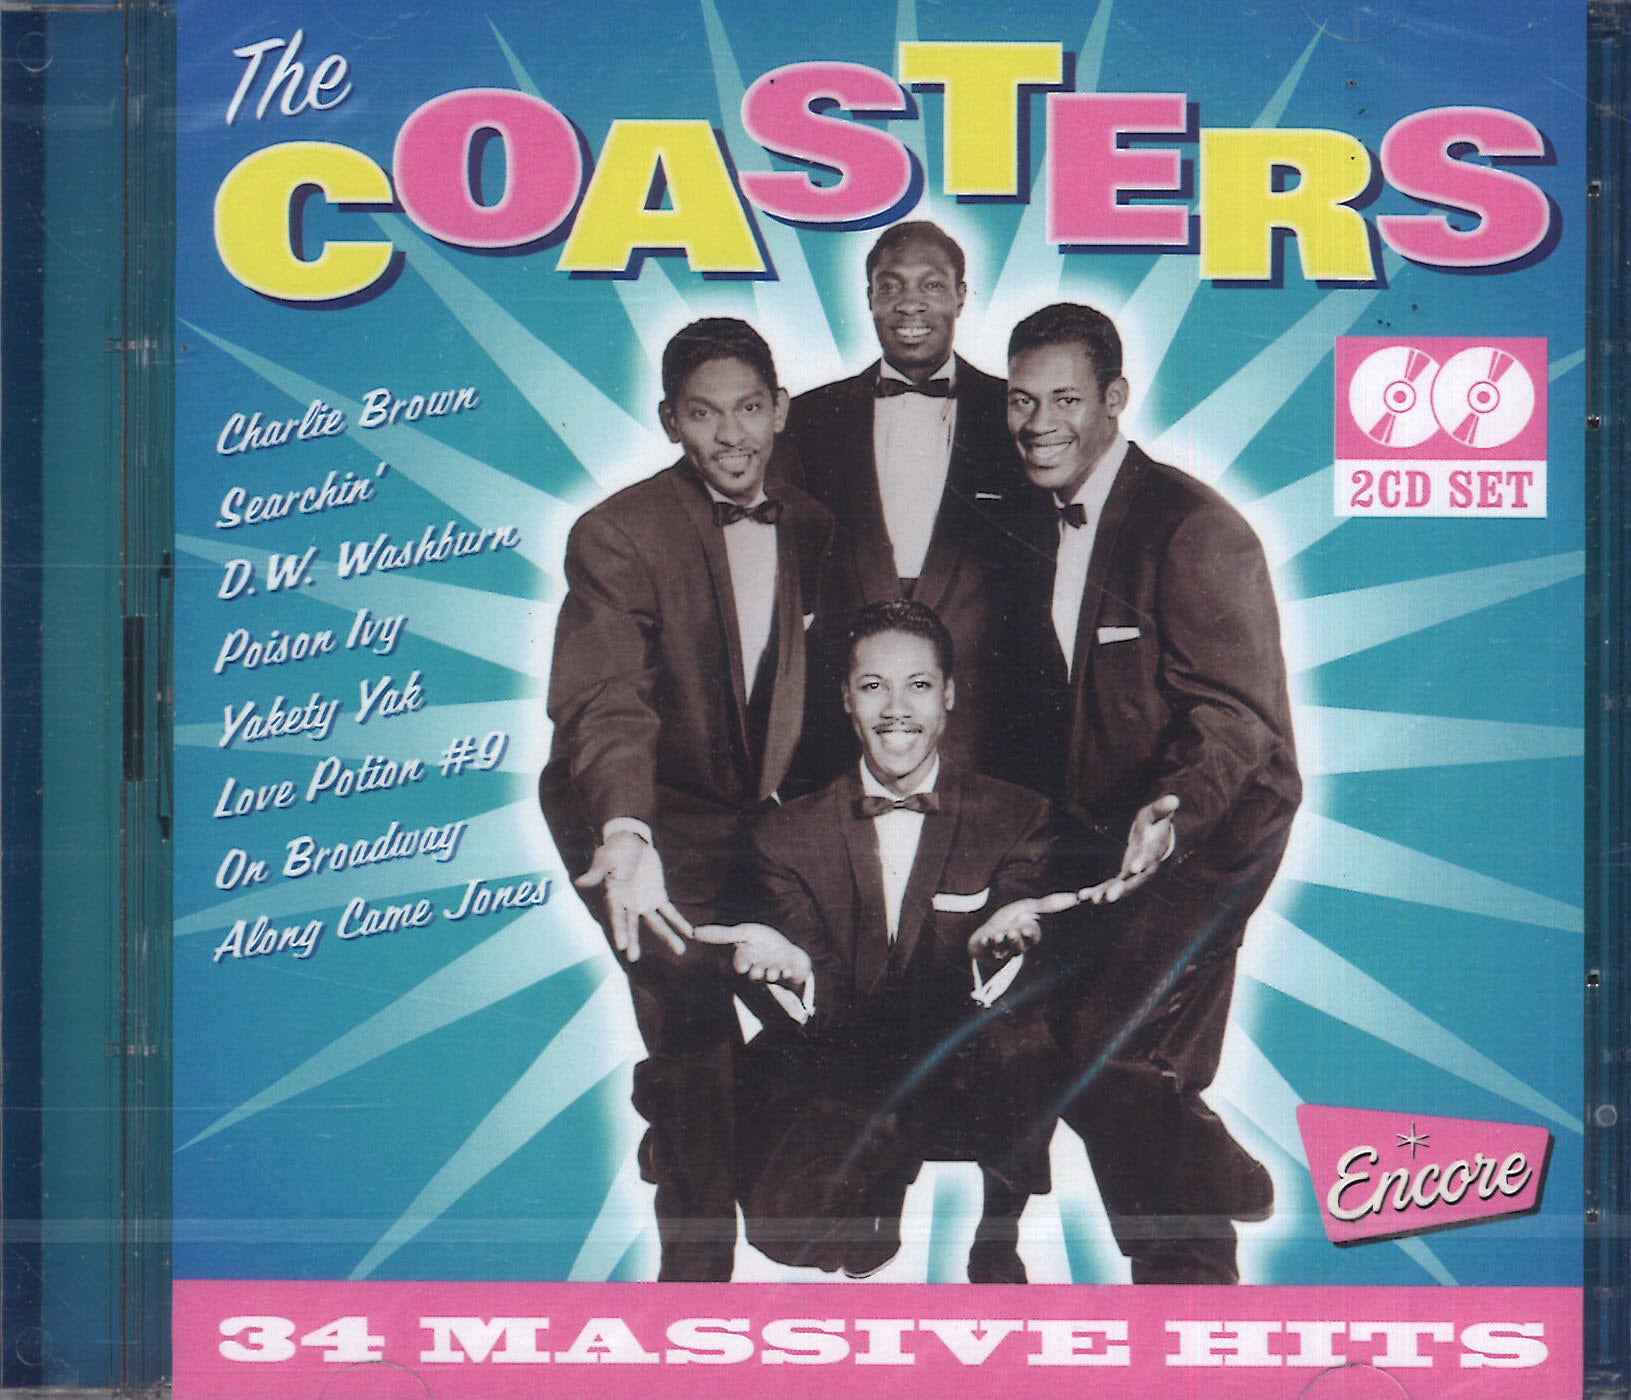 The Coasters 2 CD: 34 Massive Hits